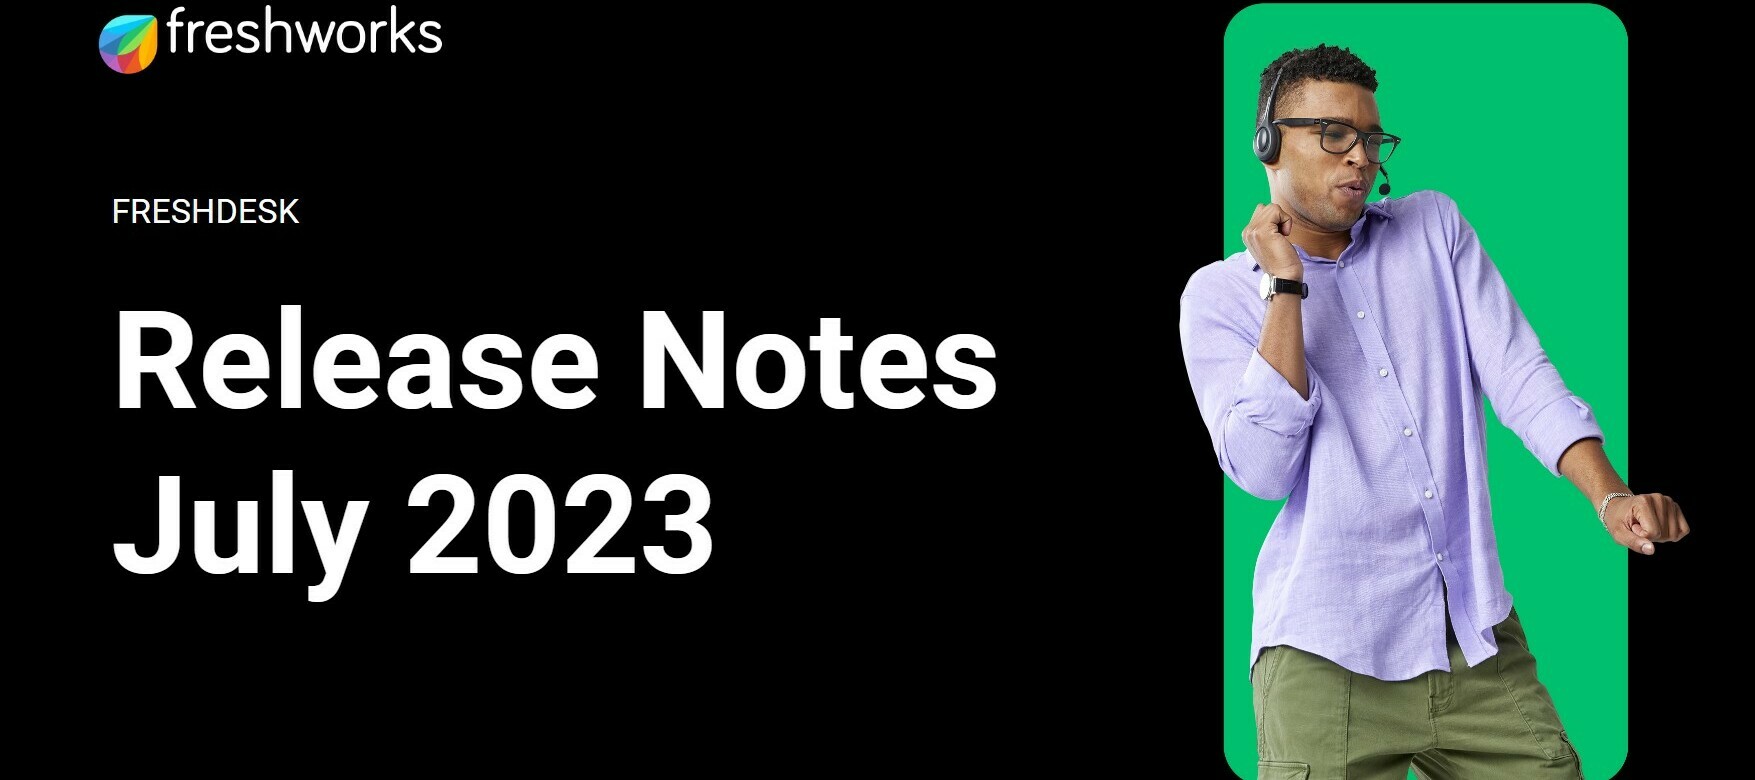 Freshdesk Release Notes - July 2023